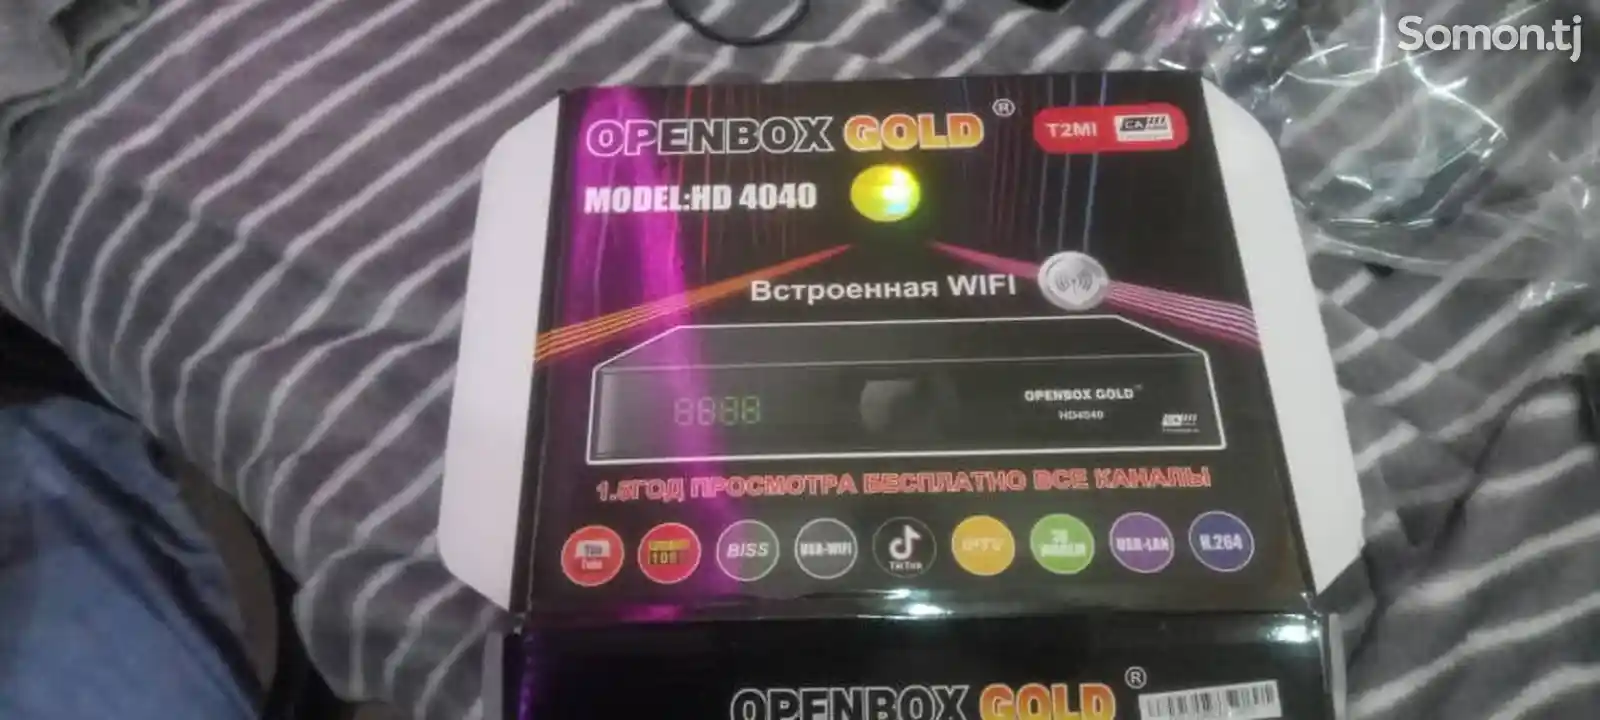 Ресивер Openbox Gold HD 4040 +WIFI + IPTV 1.5-1